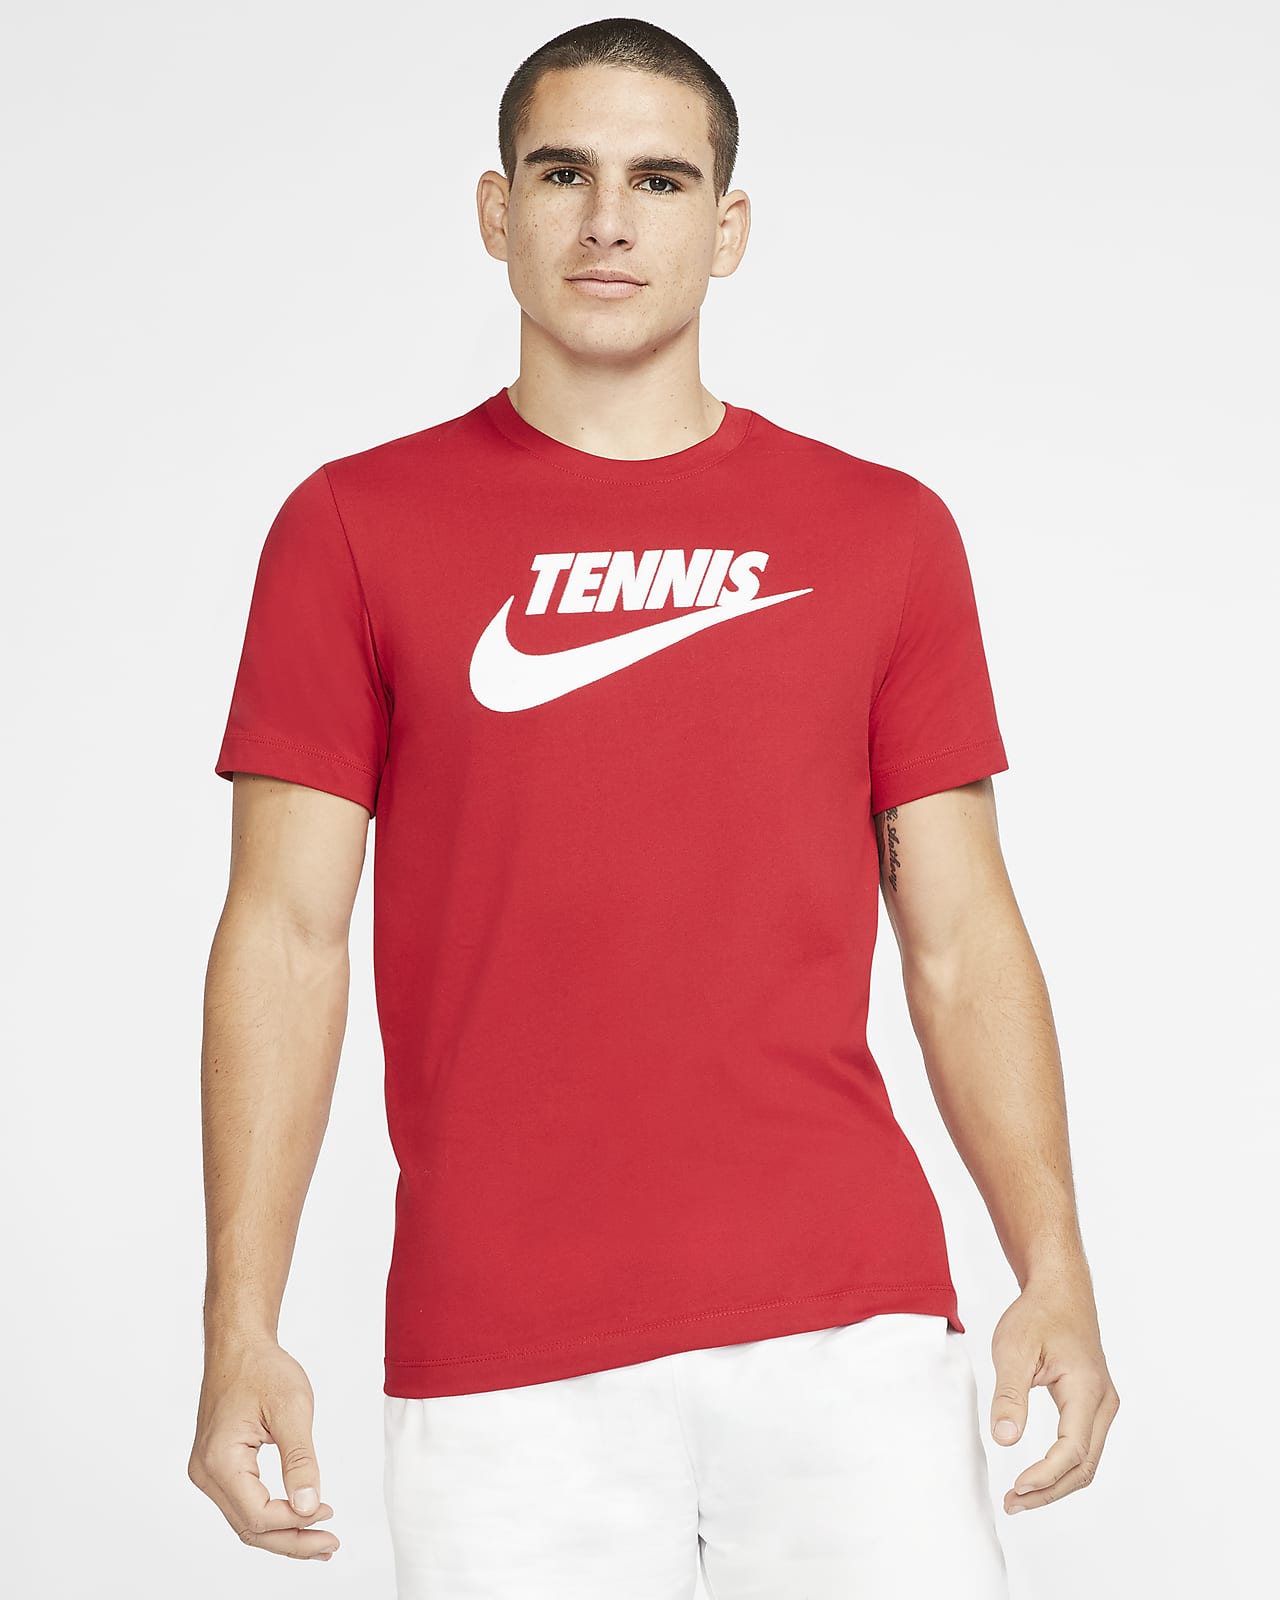 nike tennis t shirt